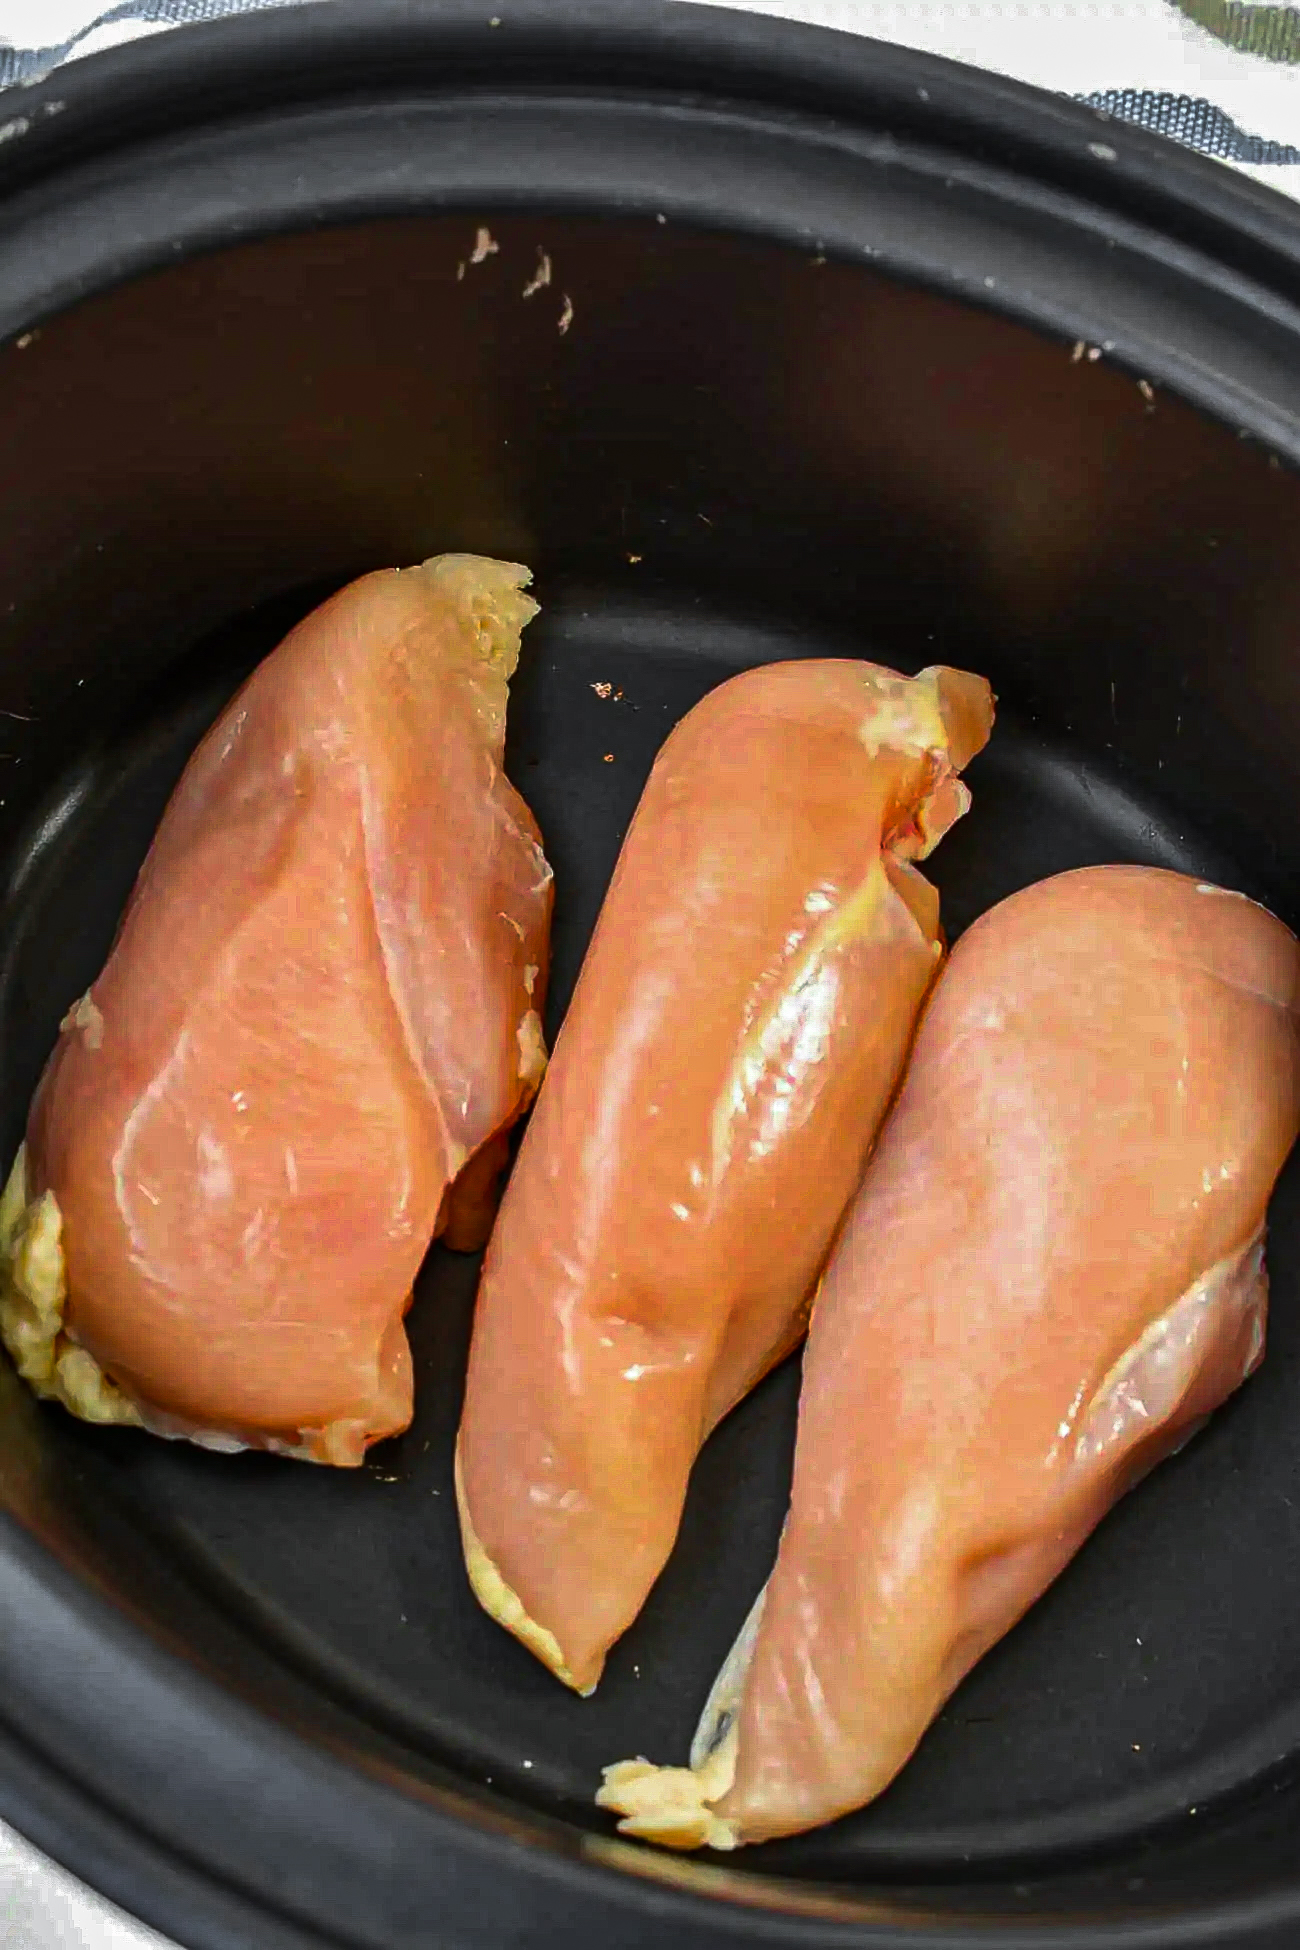 Placing chicken breasts